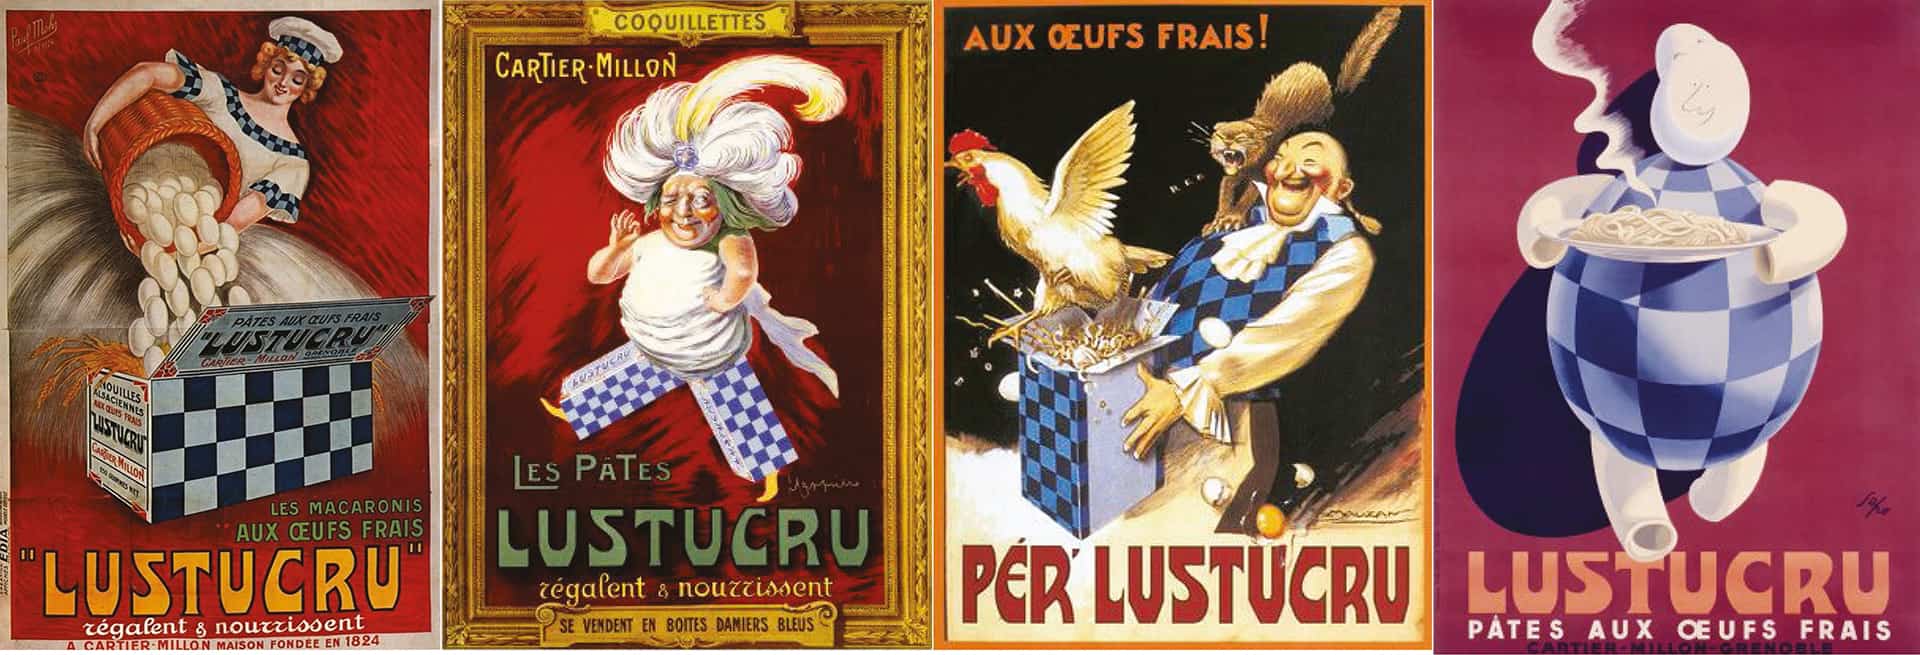 Affiches Lustucru